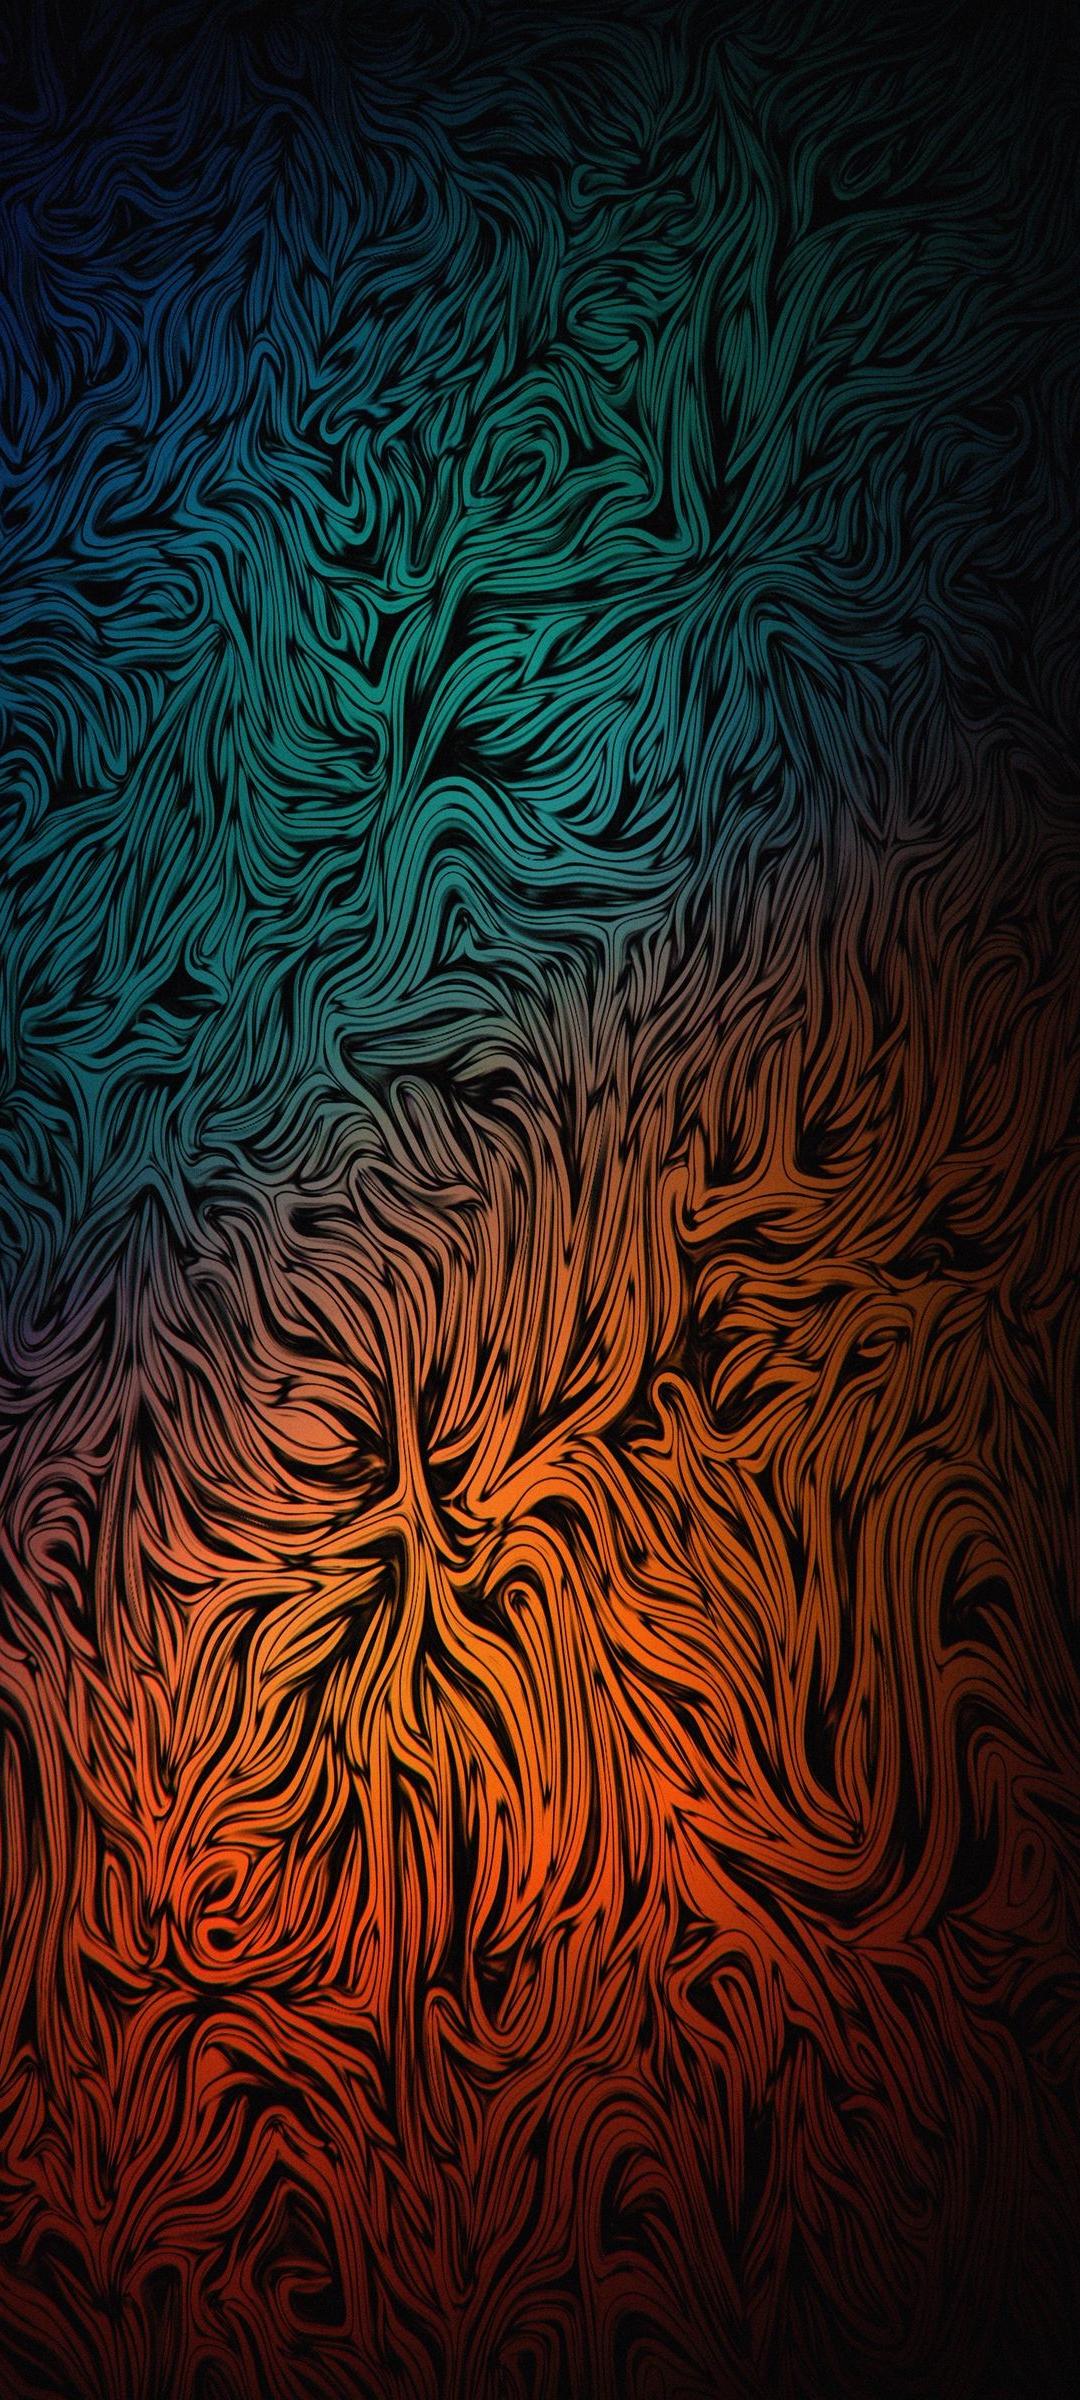 Abstract Wallpaper , iphone 13 pro max wallpaper 13 pro max Wallpaper, iPhone 12 Background, iPhone Wallpaper, iPhone background., WallpaperUpdate, Best iPhone Wallpaper and iPhone background